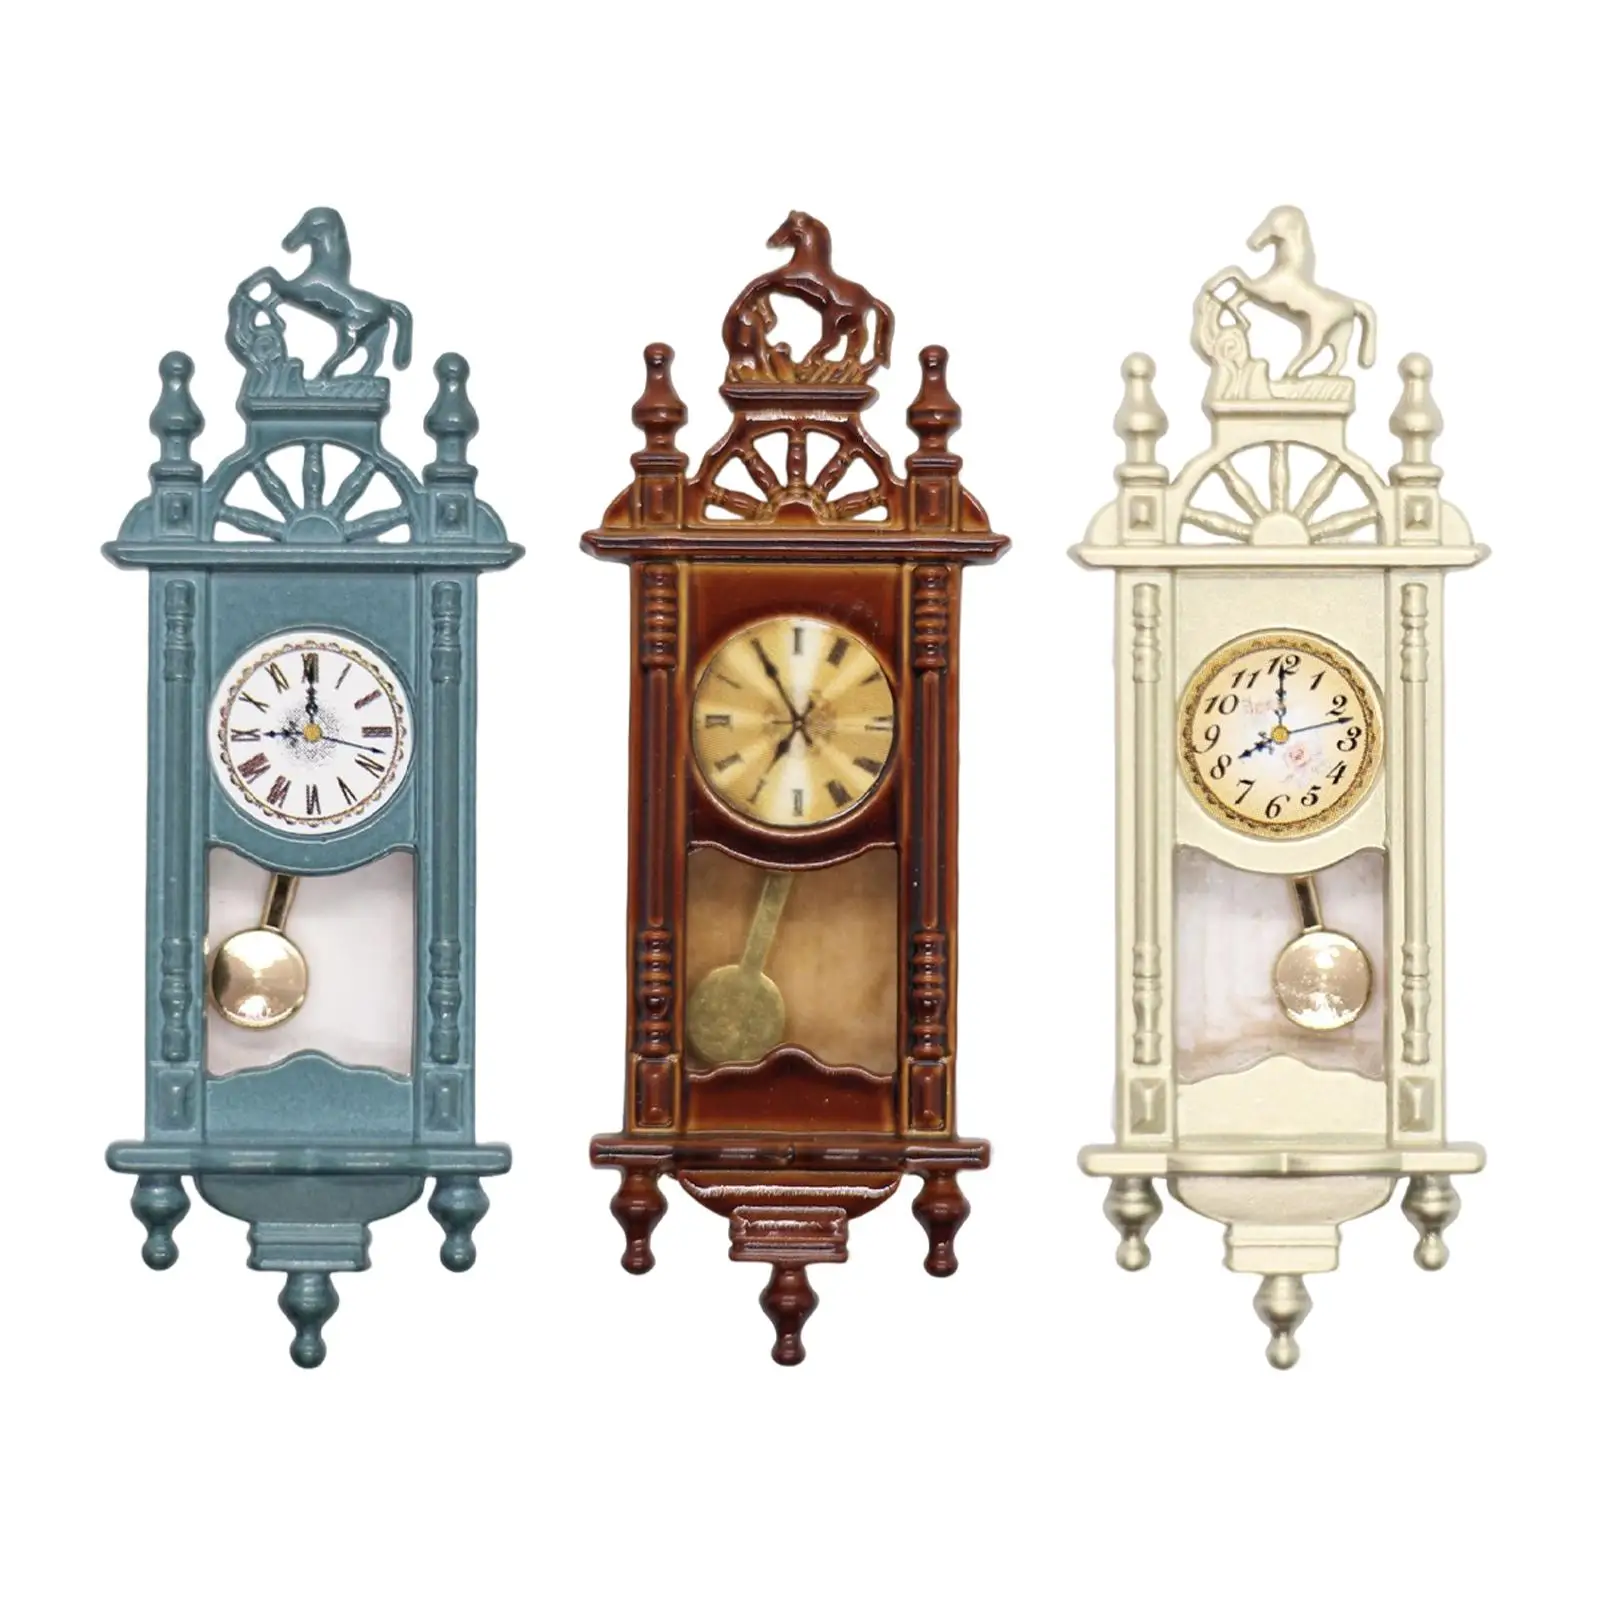 1:12 Scale Dollhouse Wall Clock Retro Clock Delicate Model Wooden Frame Clock Accessory DIY Furniture Model Pretend Play